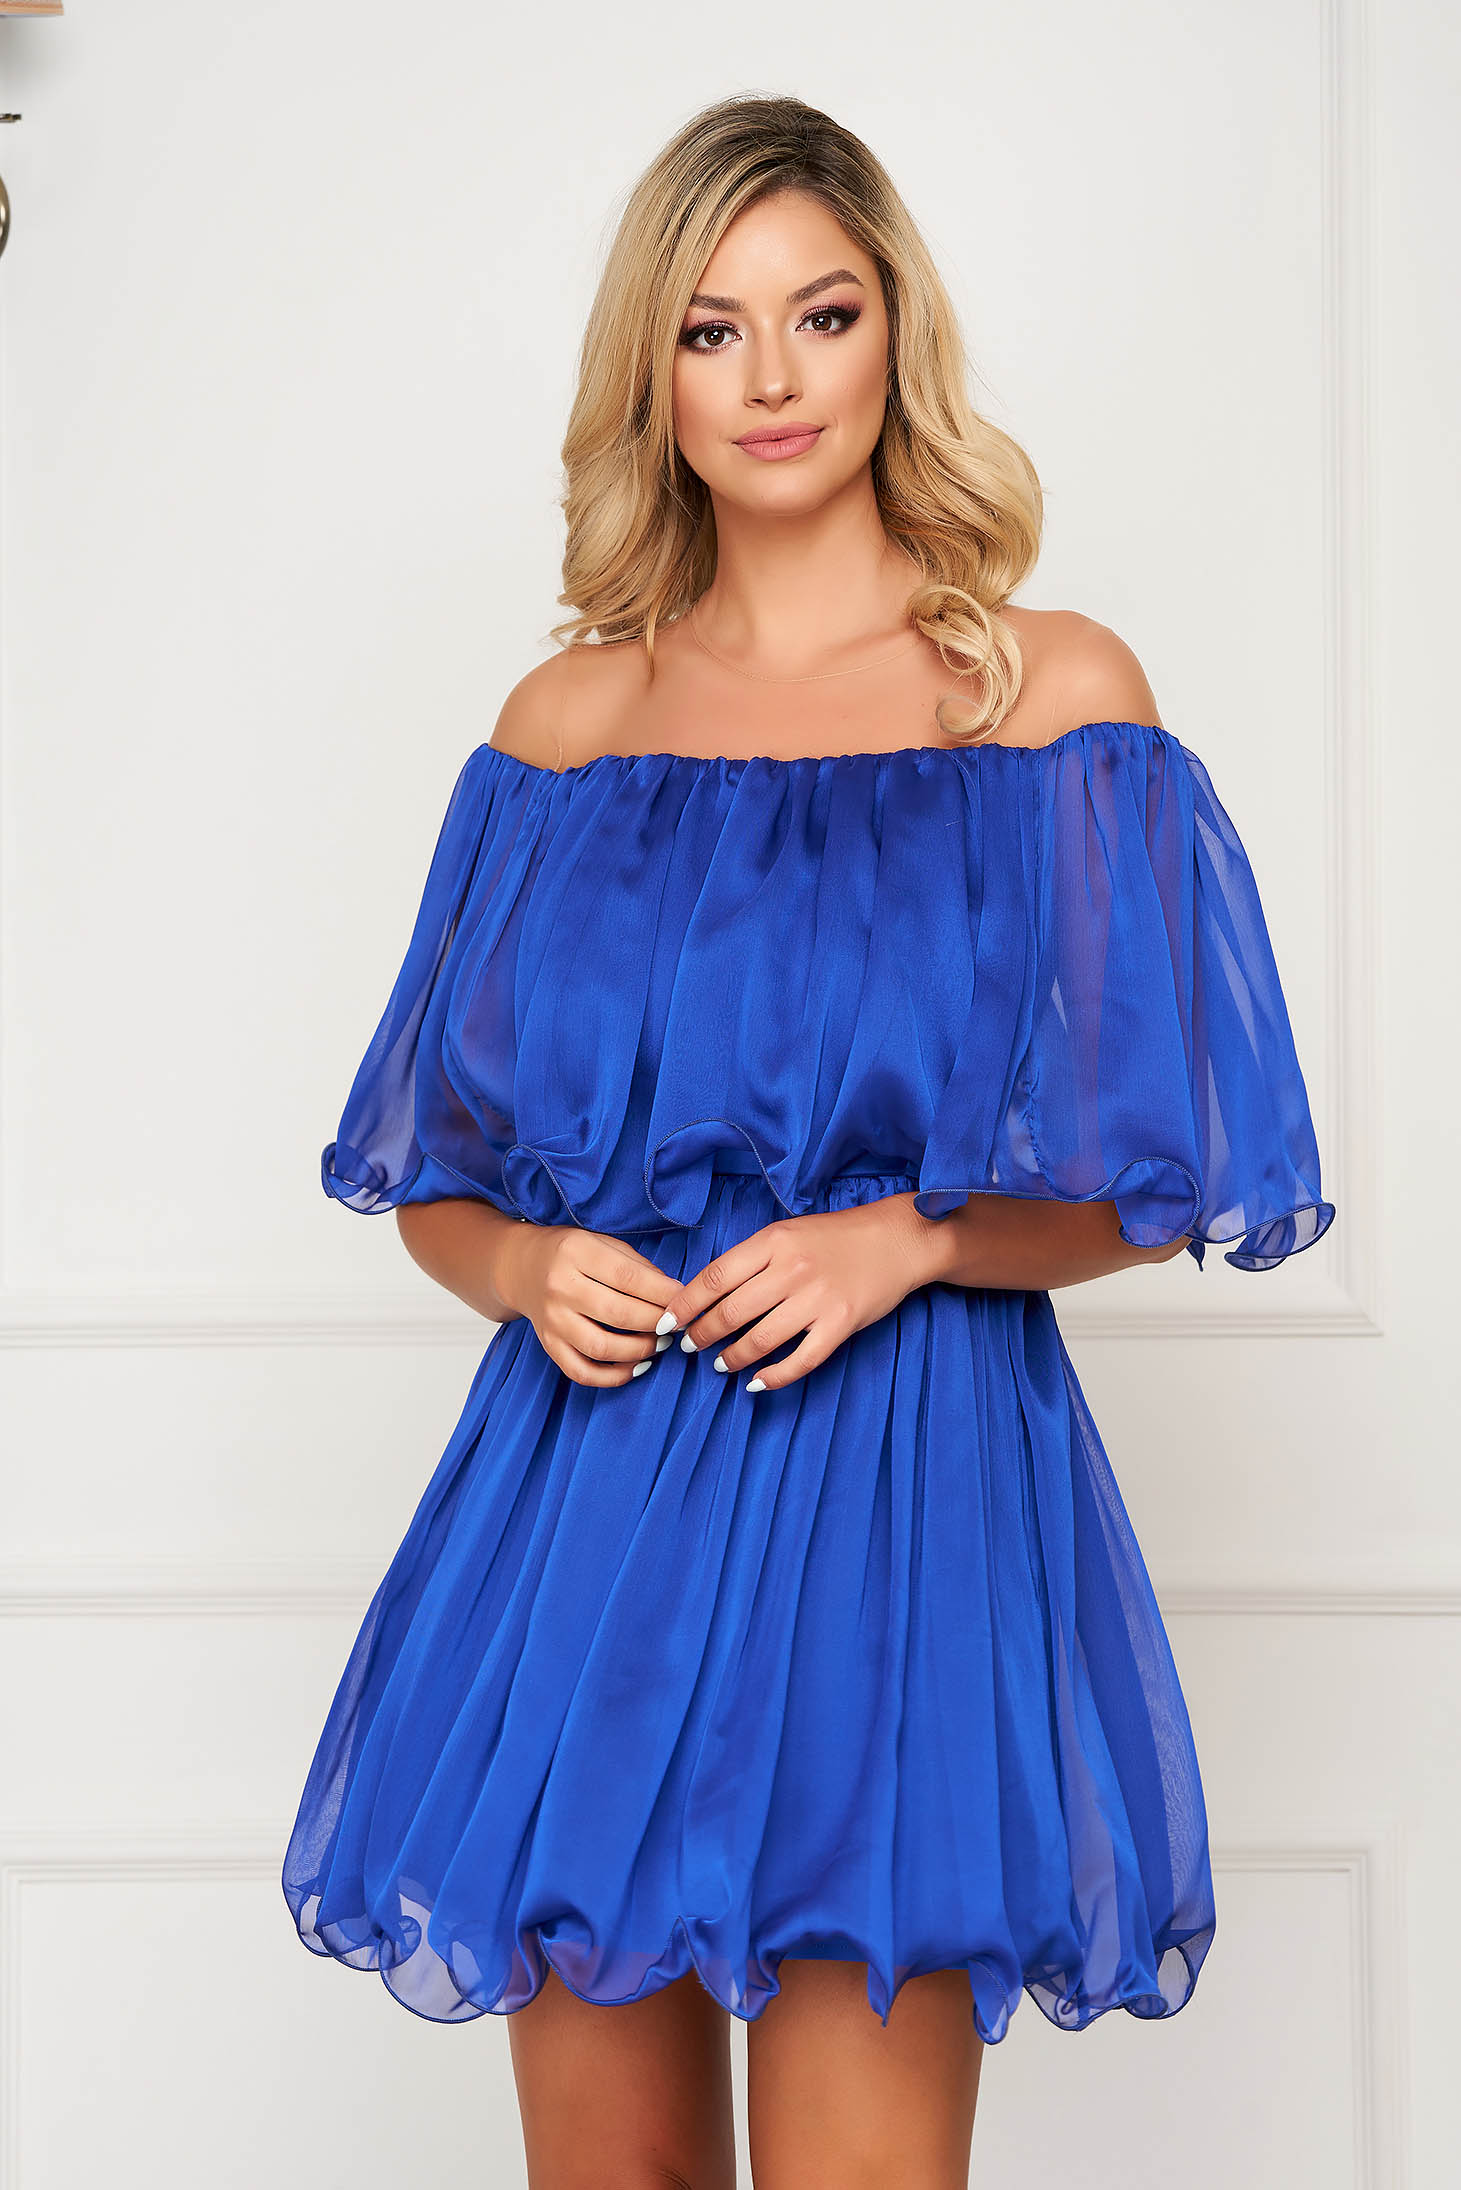 Blue dress short cut cloche off-shoulder thin fabric